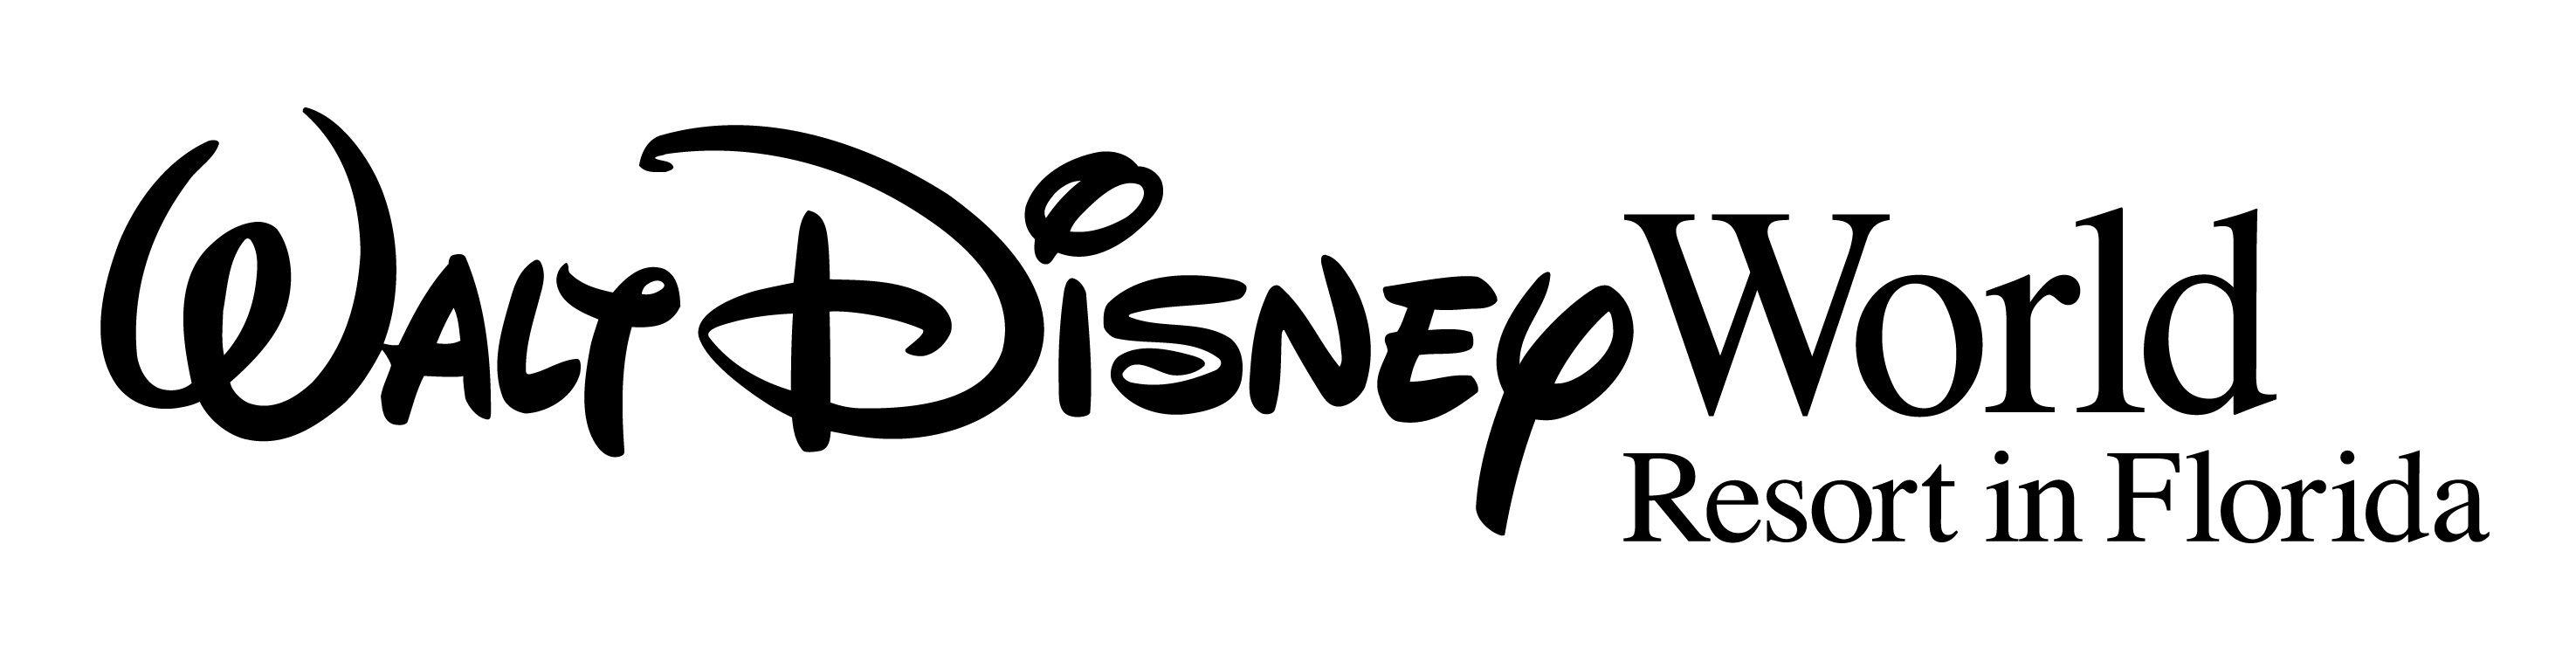 New Walt Disney World Logo - Walt Disney World Resort in Florida